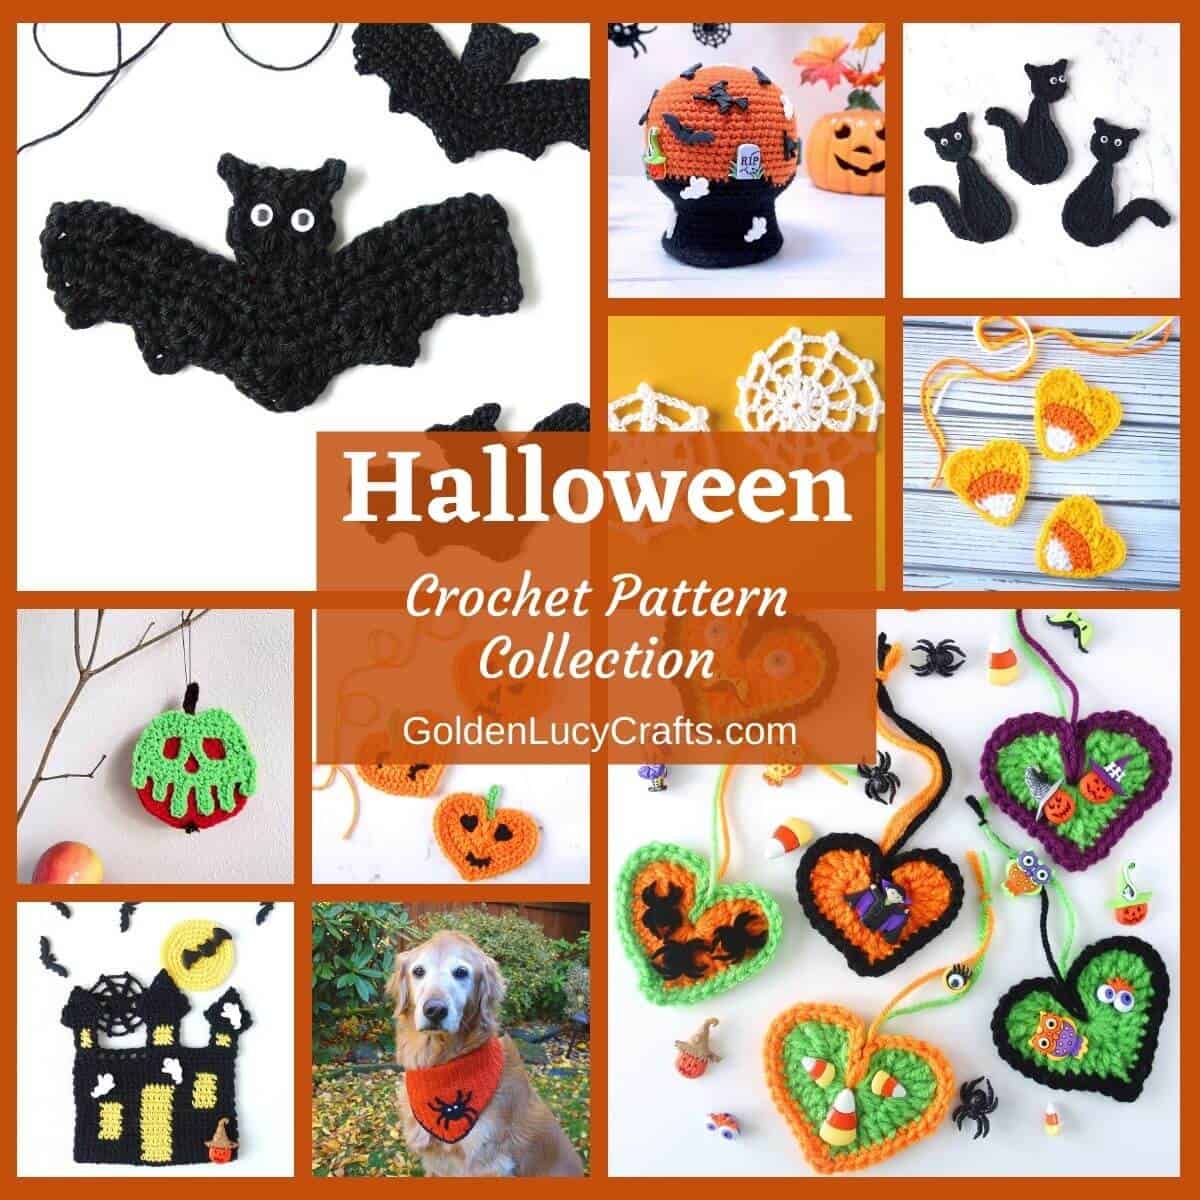 Crochet Halloween themed designs photo collage, overlay text saying Halloween crochet pattern collection goldenlucycrafts dot com.